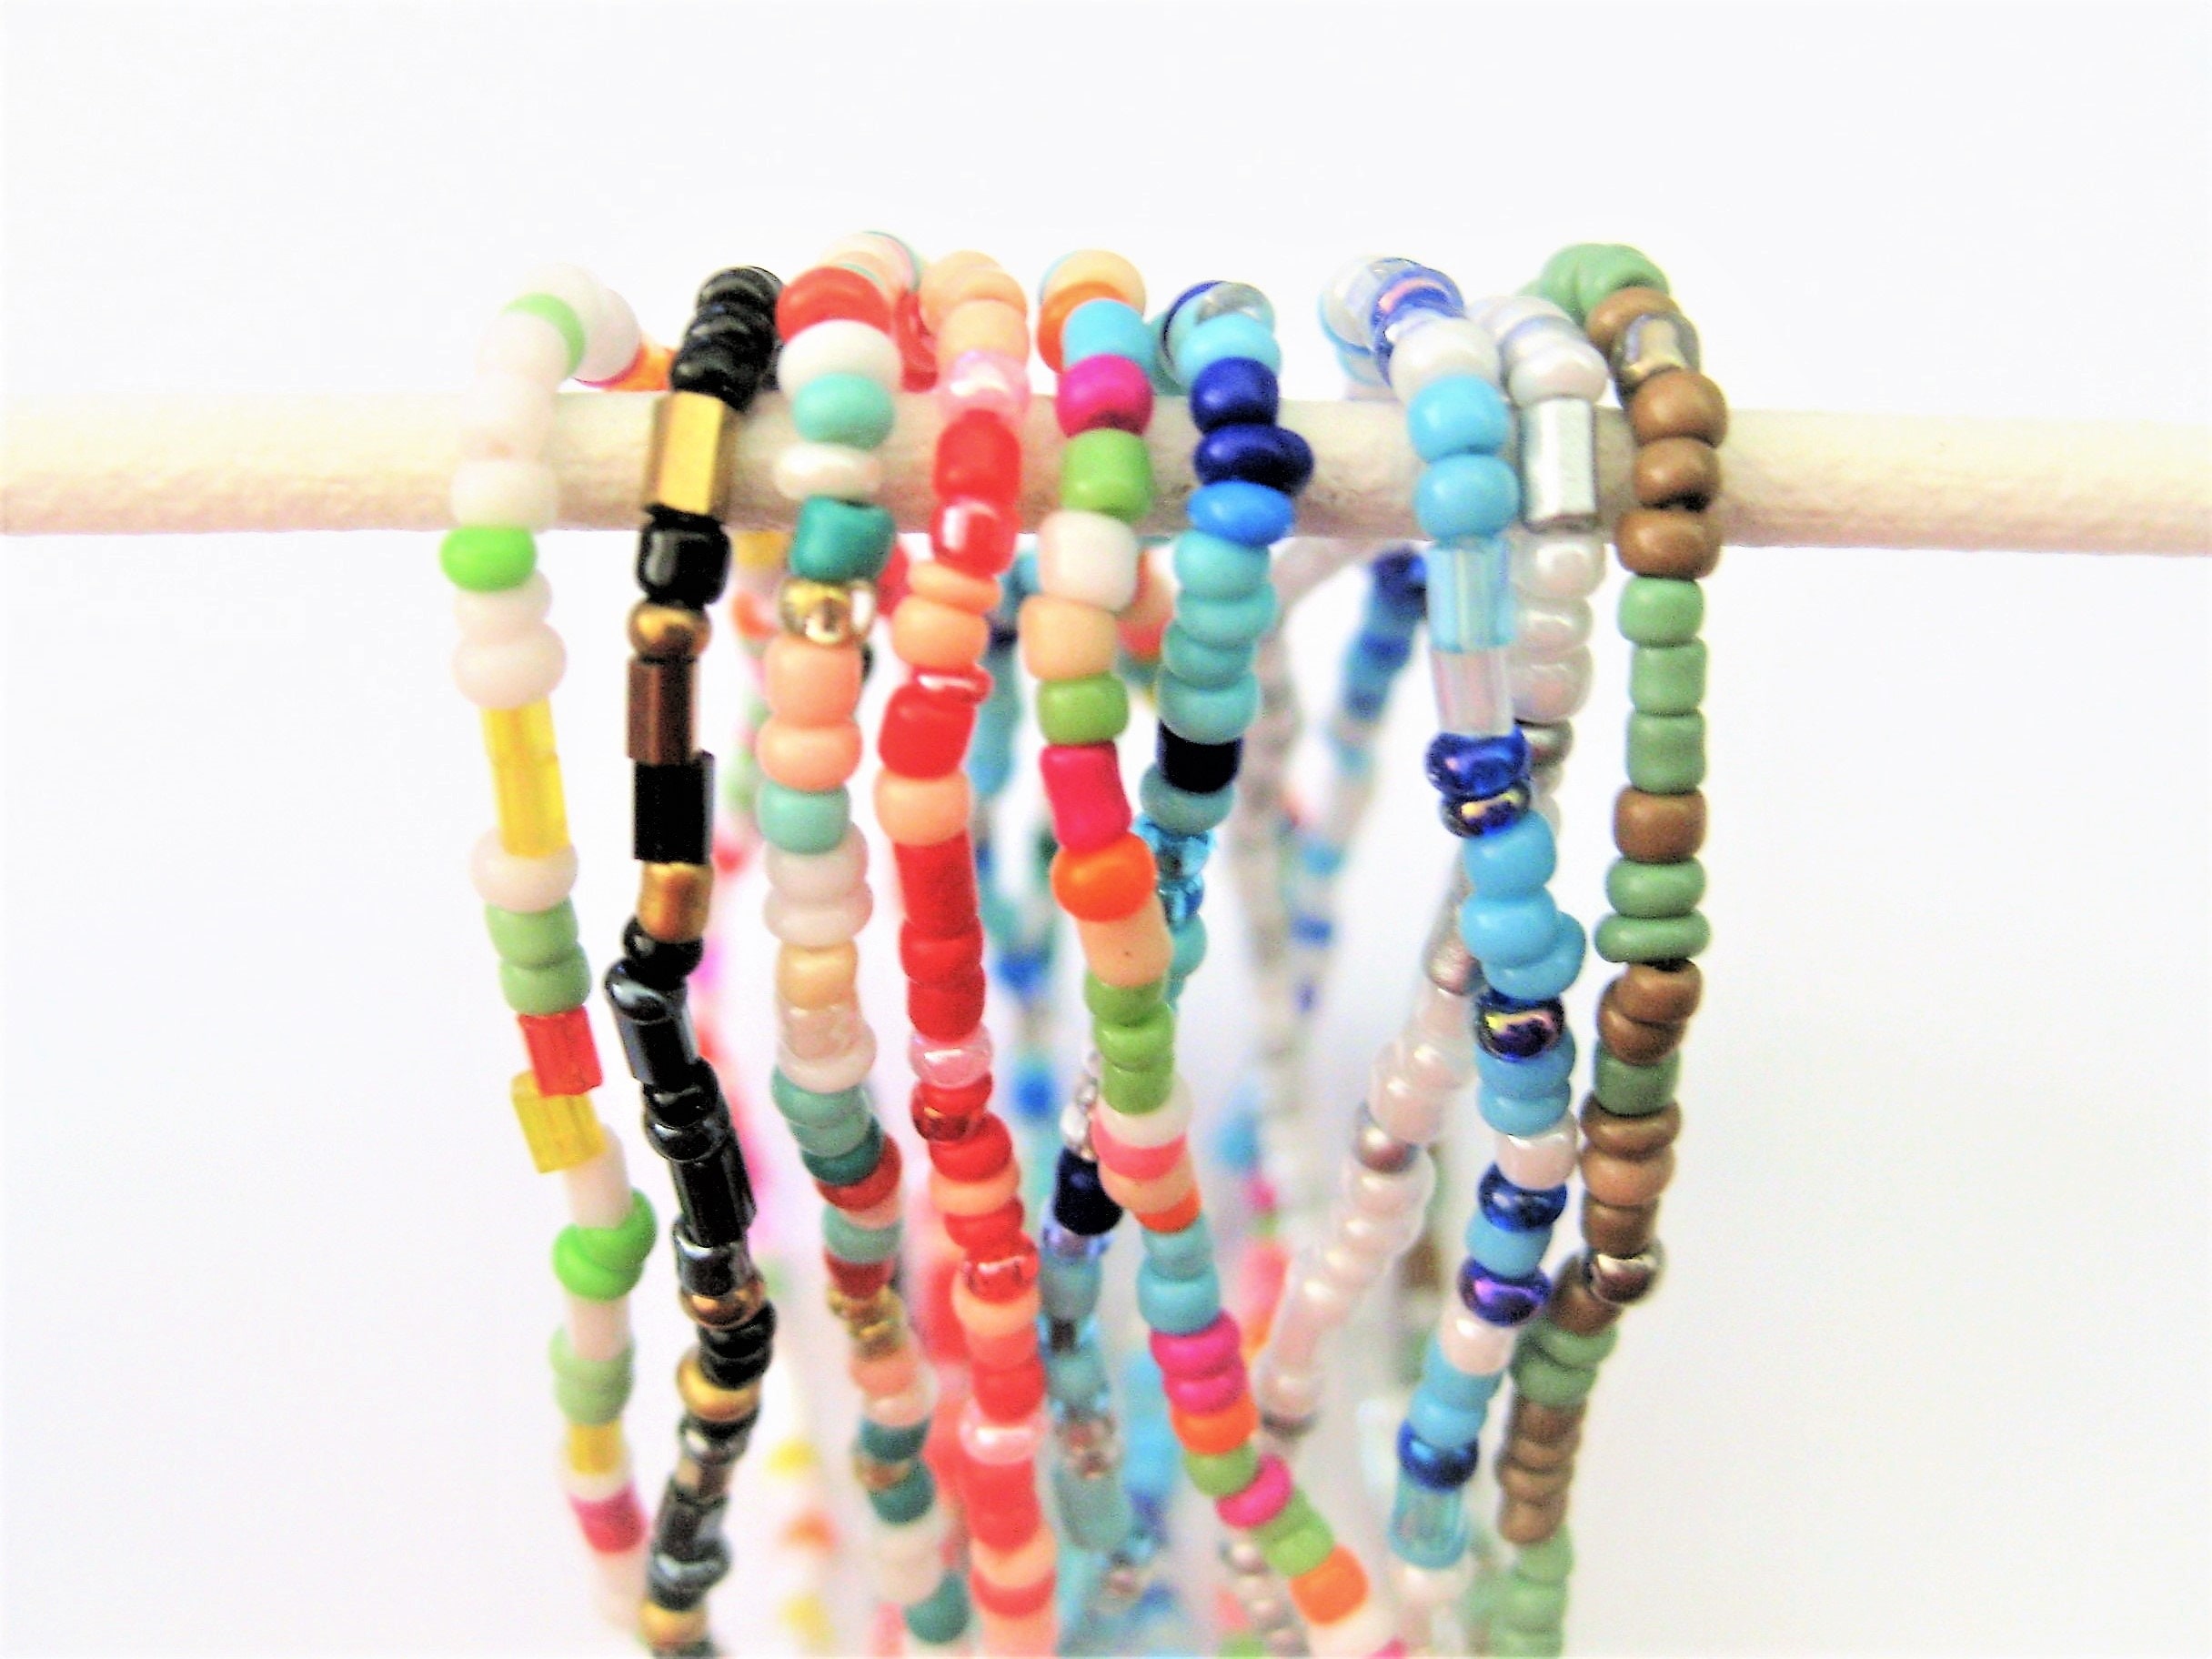 Macrame Glass Seed Bead Adjustable Bracelet – Stones + Paper